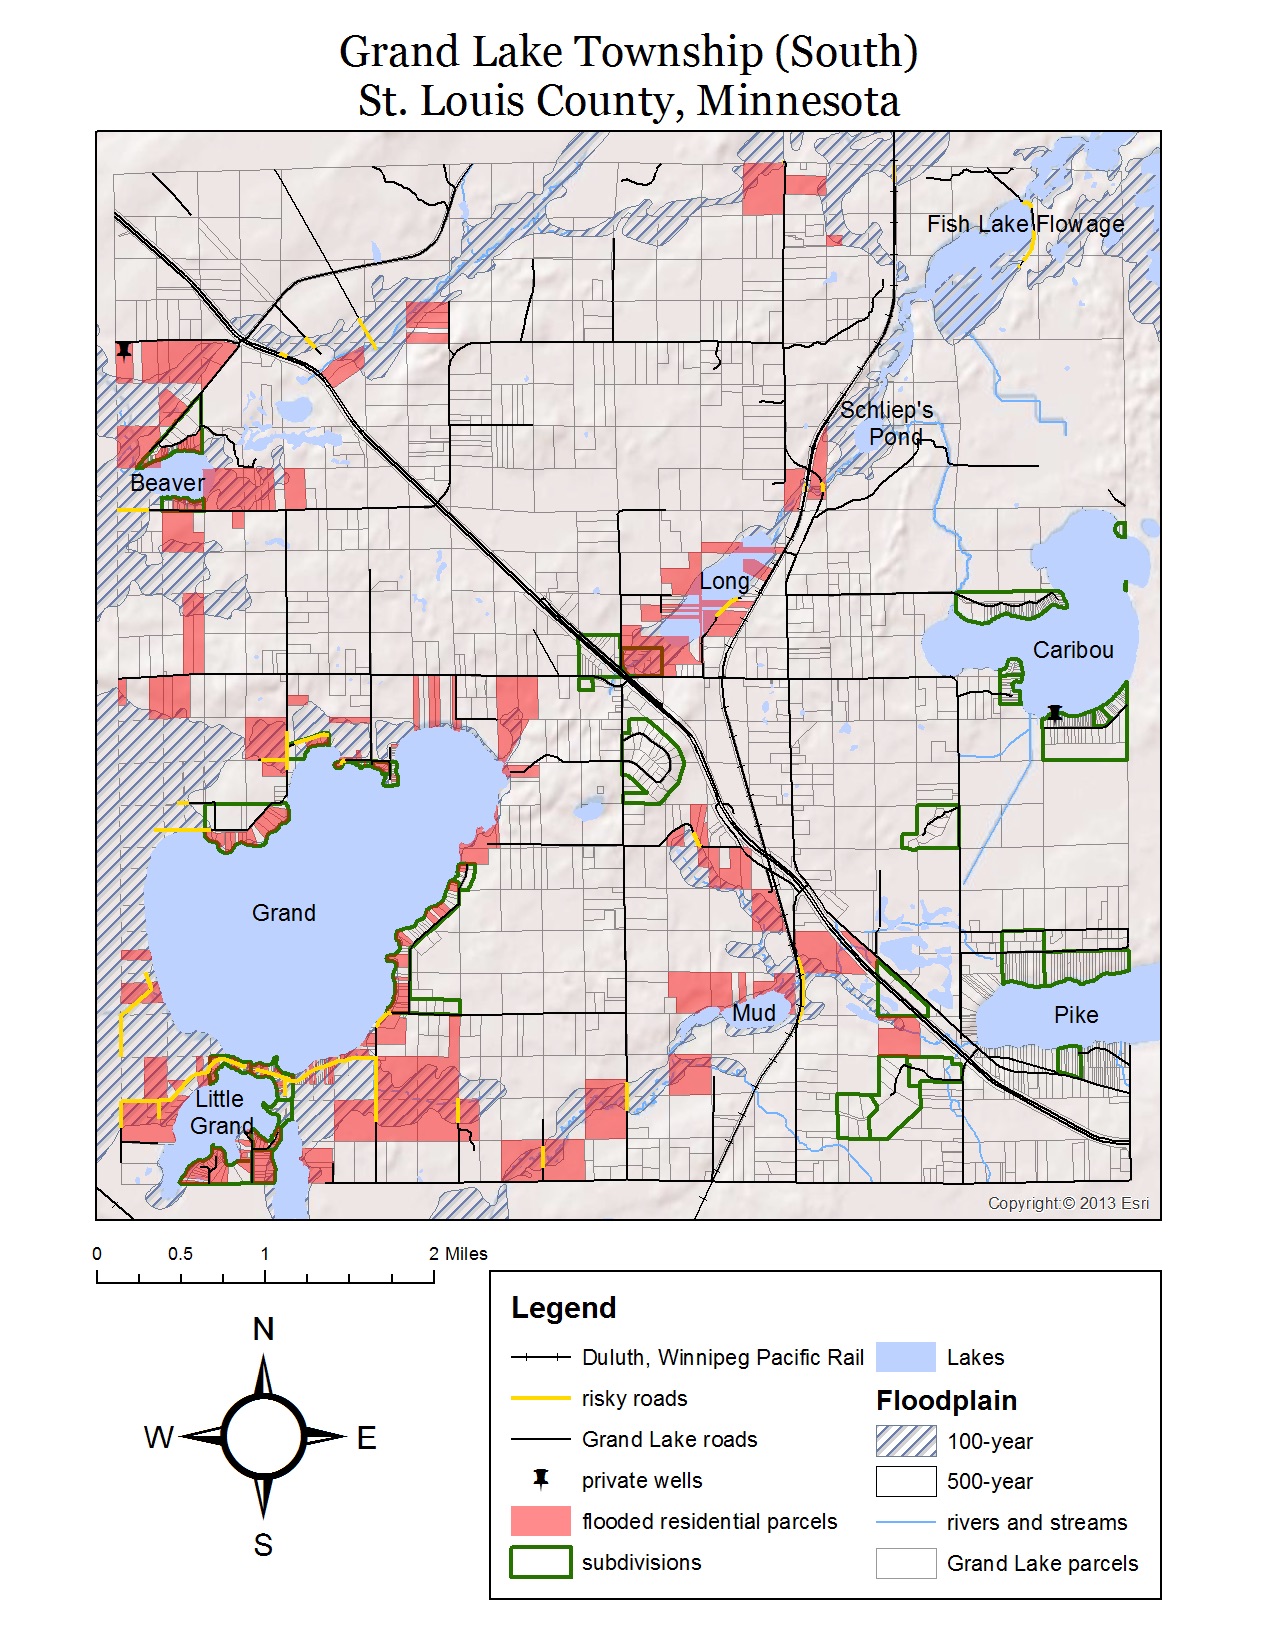 Floodplain analysis of Grand Lake Township, Minnesota
